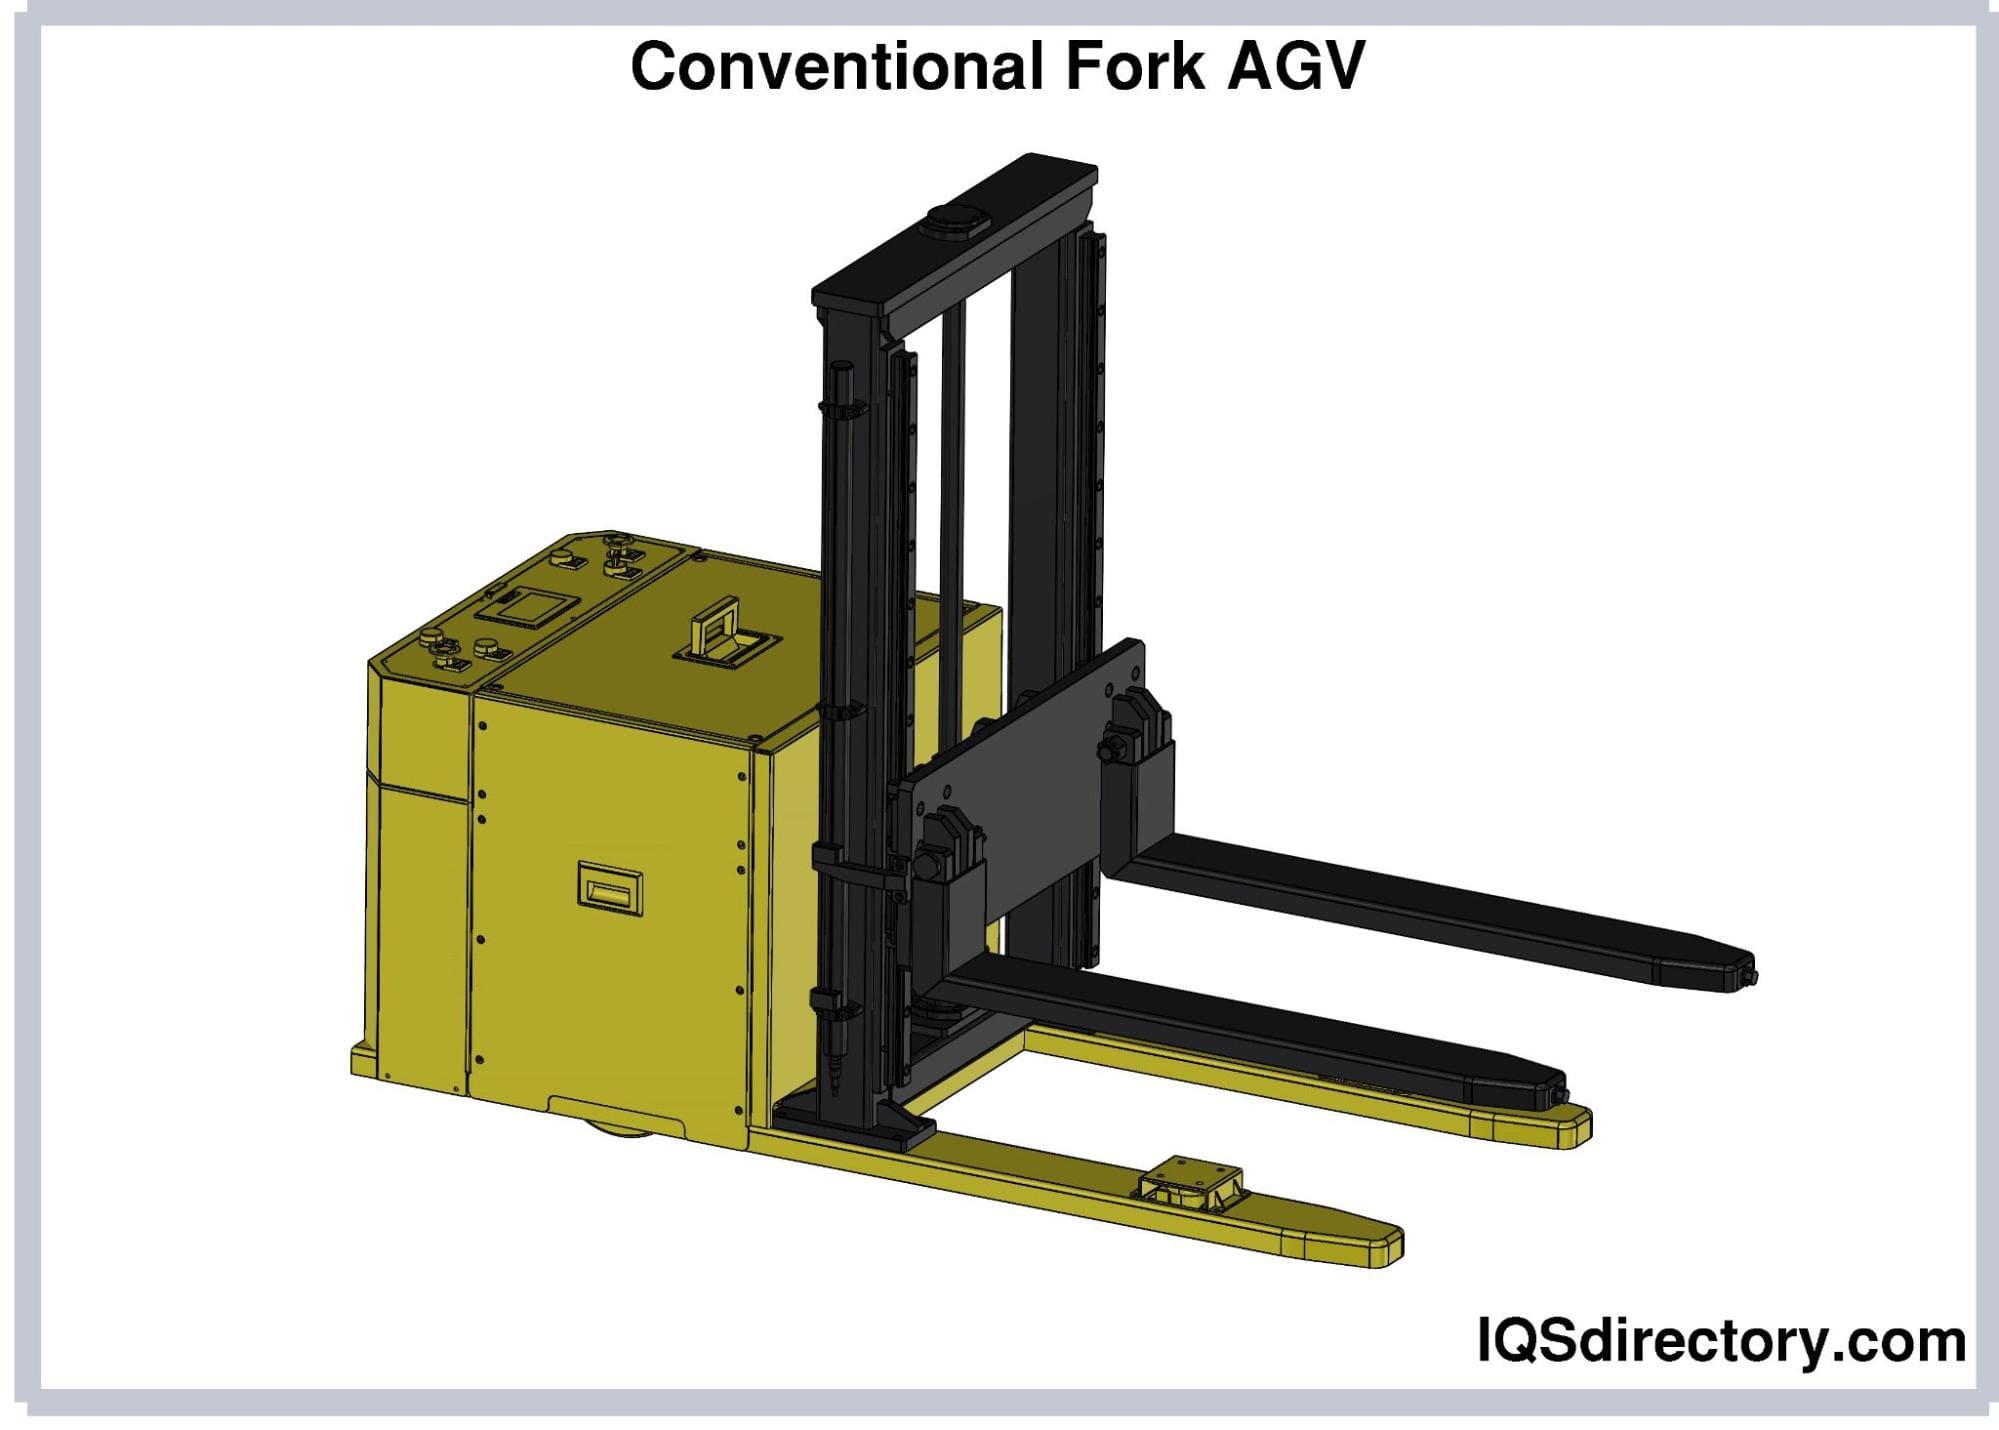  A Conventional Fork AGV